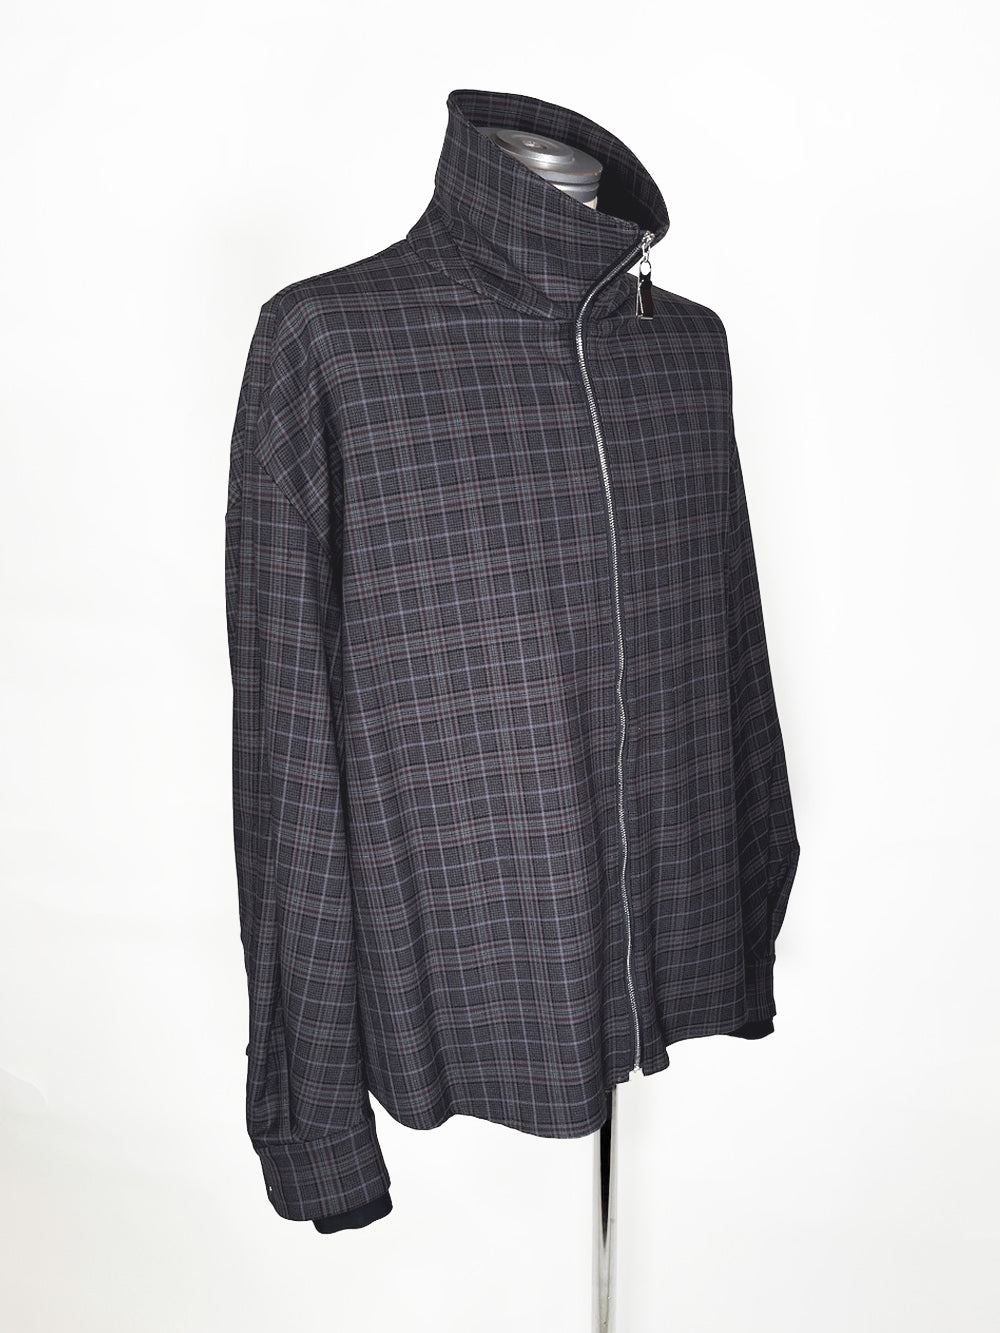 LB23AW-SHBL01-CWE-CK | ダブルカフストラックシャツジャケット | CHECK×BLACK